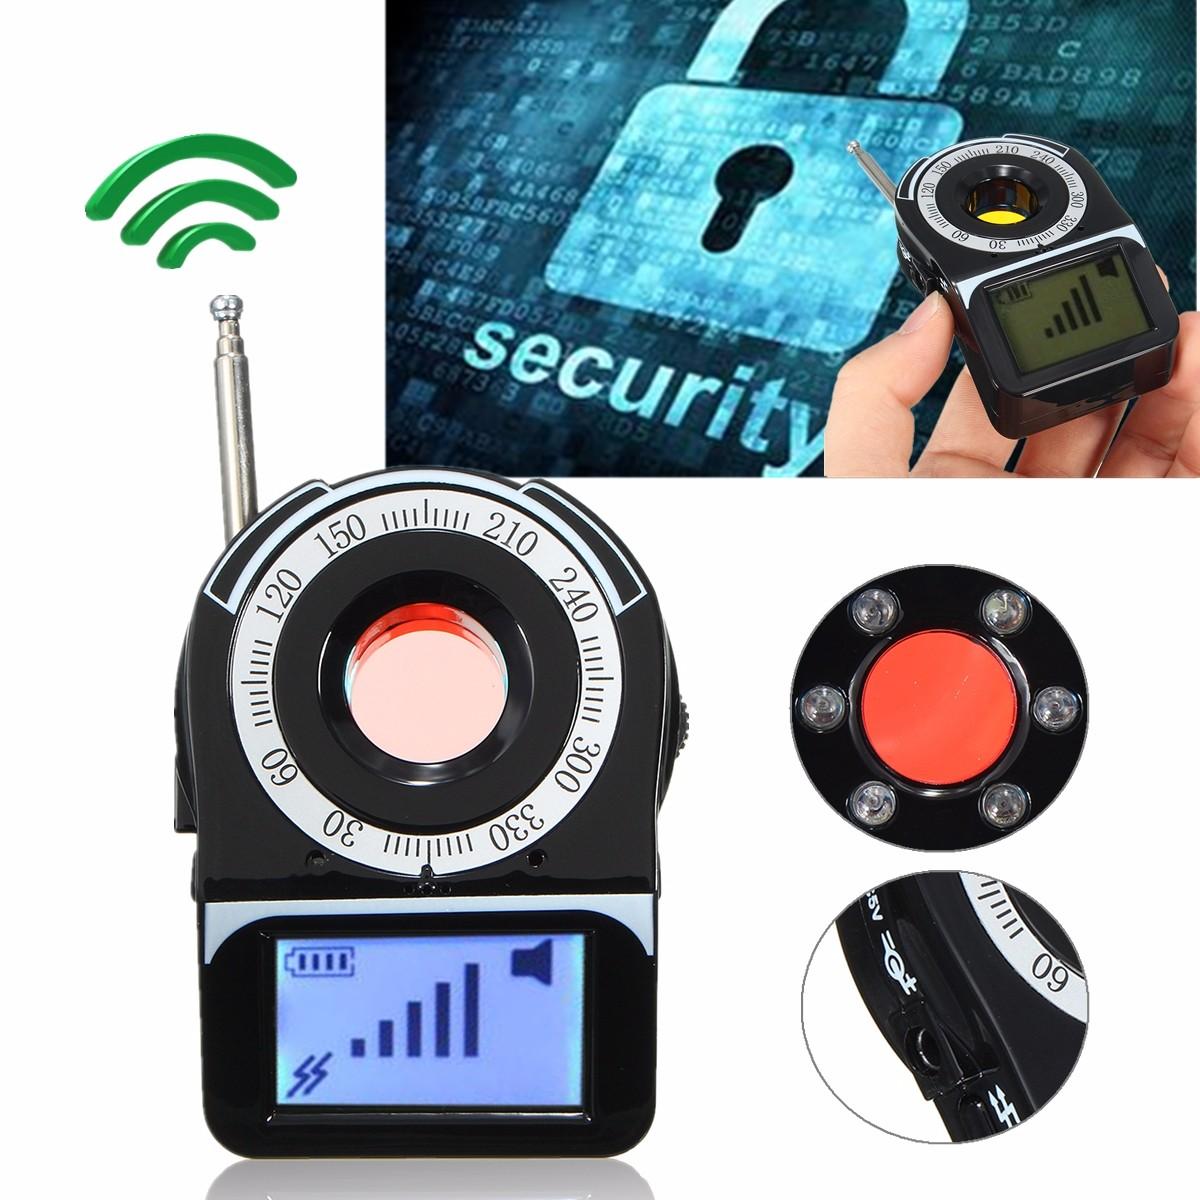 

CC309 + Anti-Taping GPS GSM WIFI G4 камера Автоматический детектор радиочастотного сигнала Finder